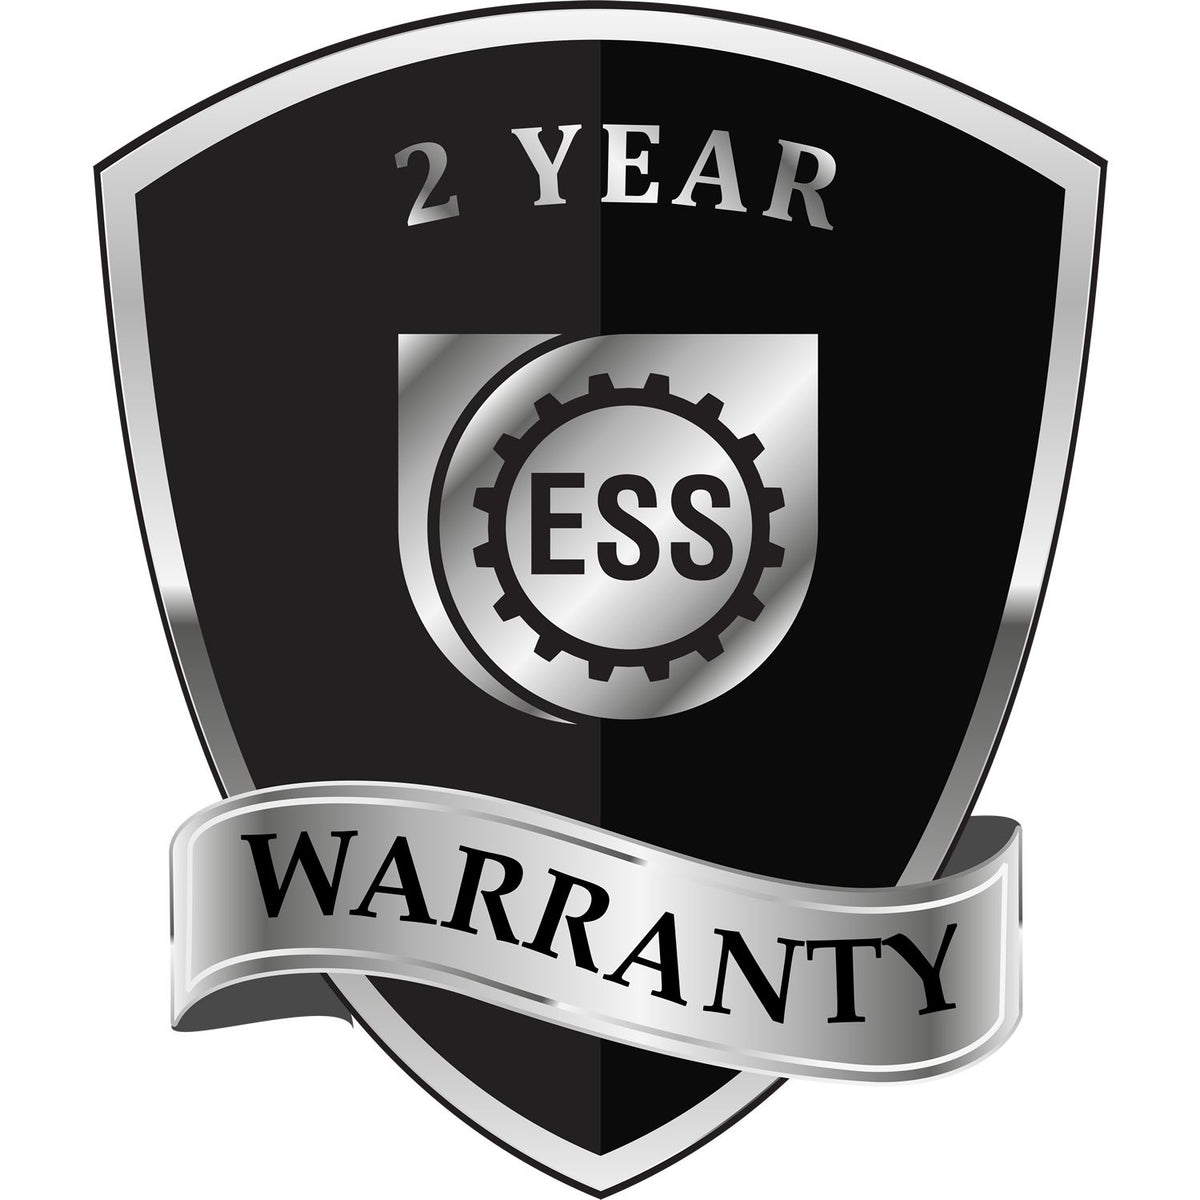 A black and silver badge or emblem showing warranty information for the Hybrid West Virginia Land Surveyor Seal